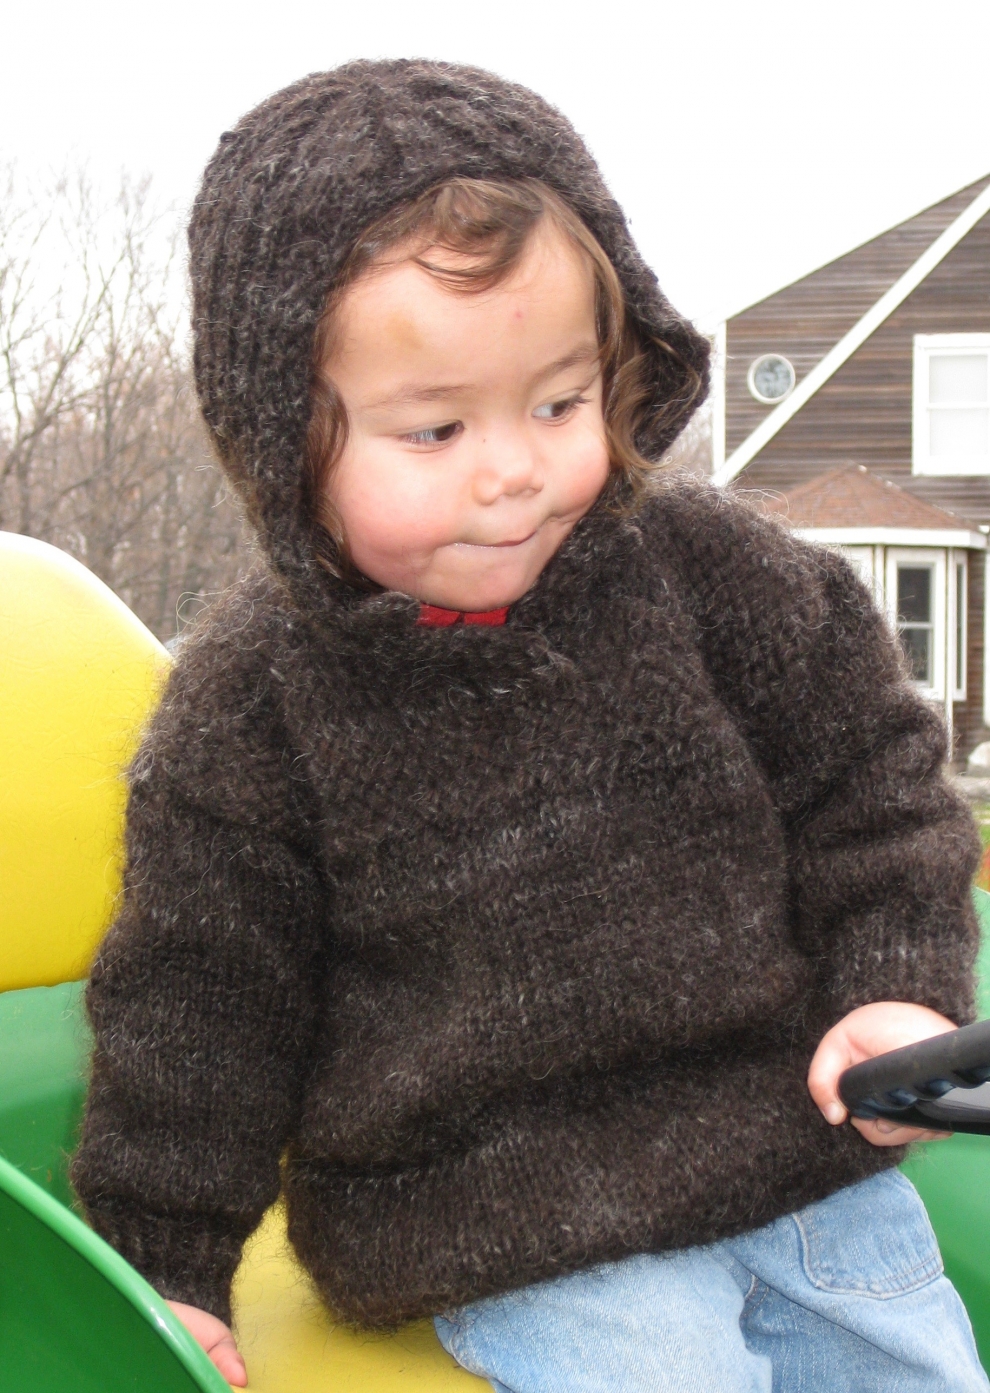 Sundborn child wool sweater handmade 